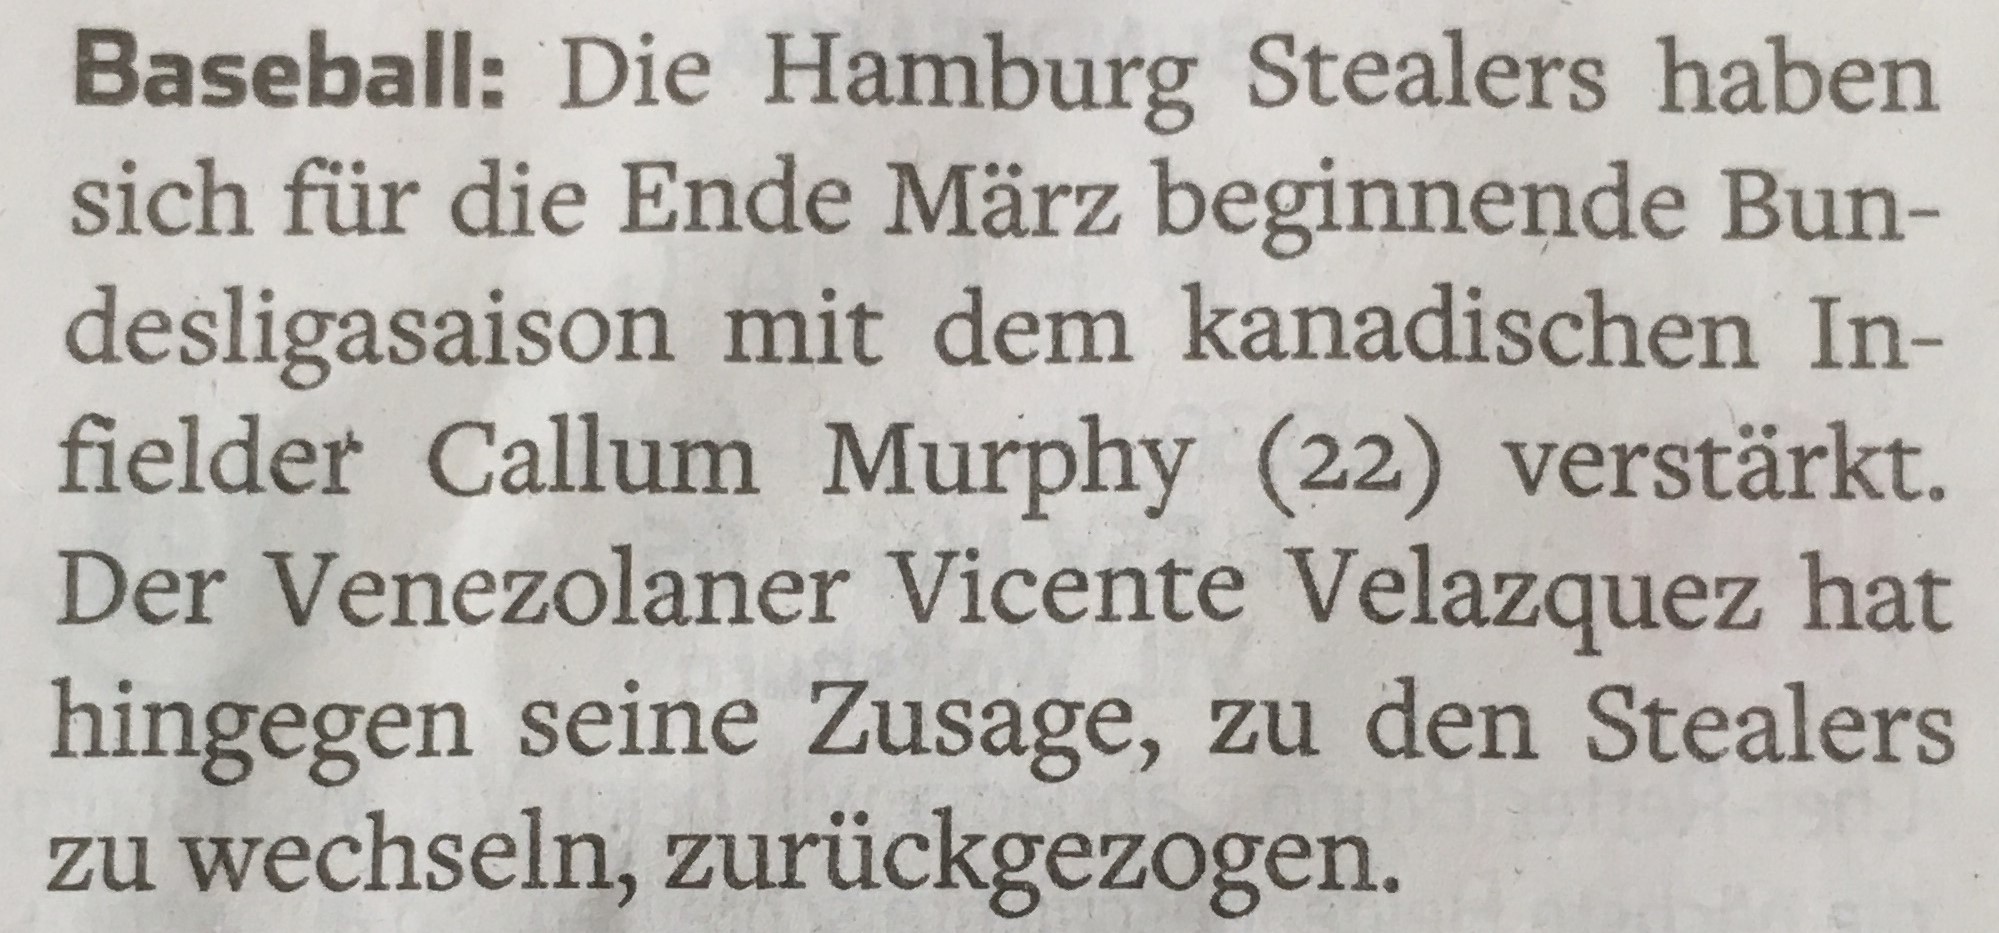 Hamburger Abendblatt 23.2.2018 Callum Murphy